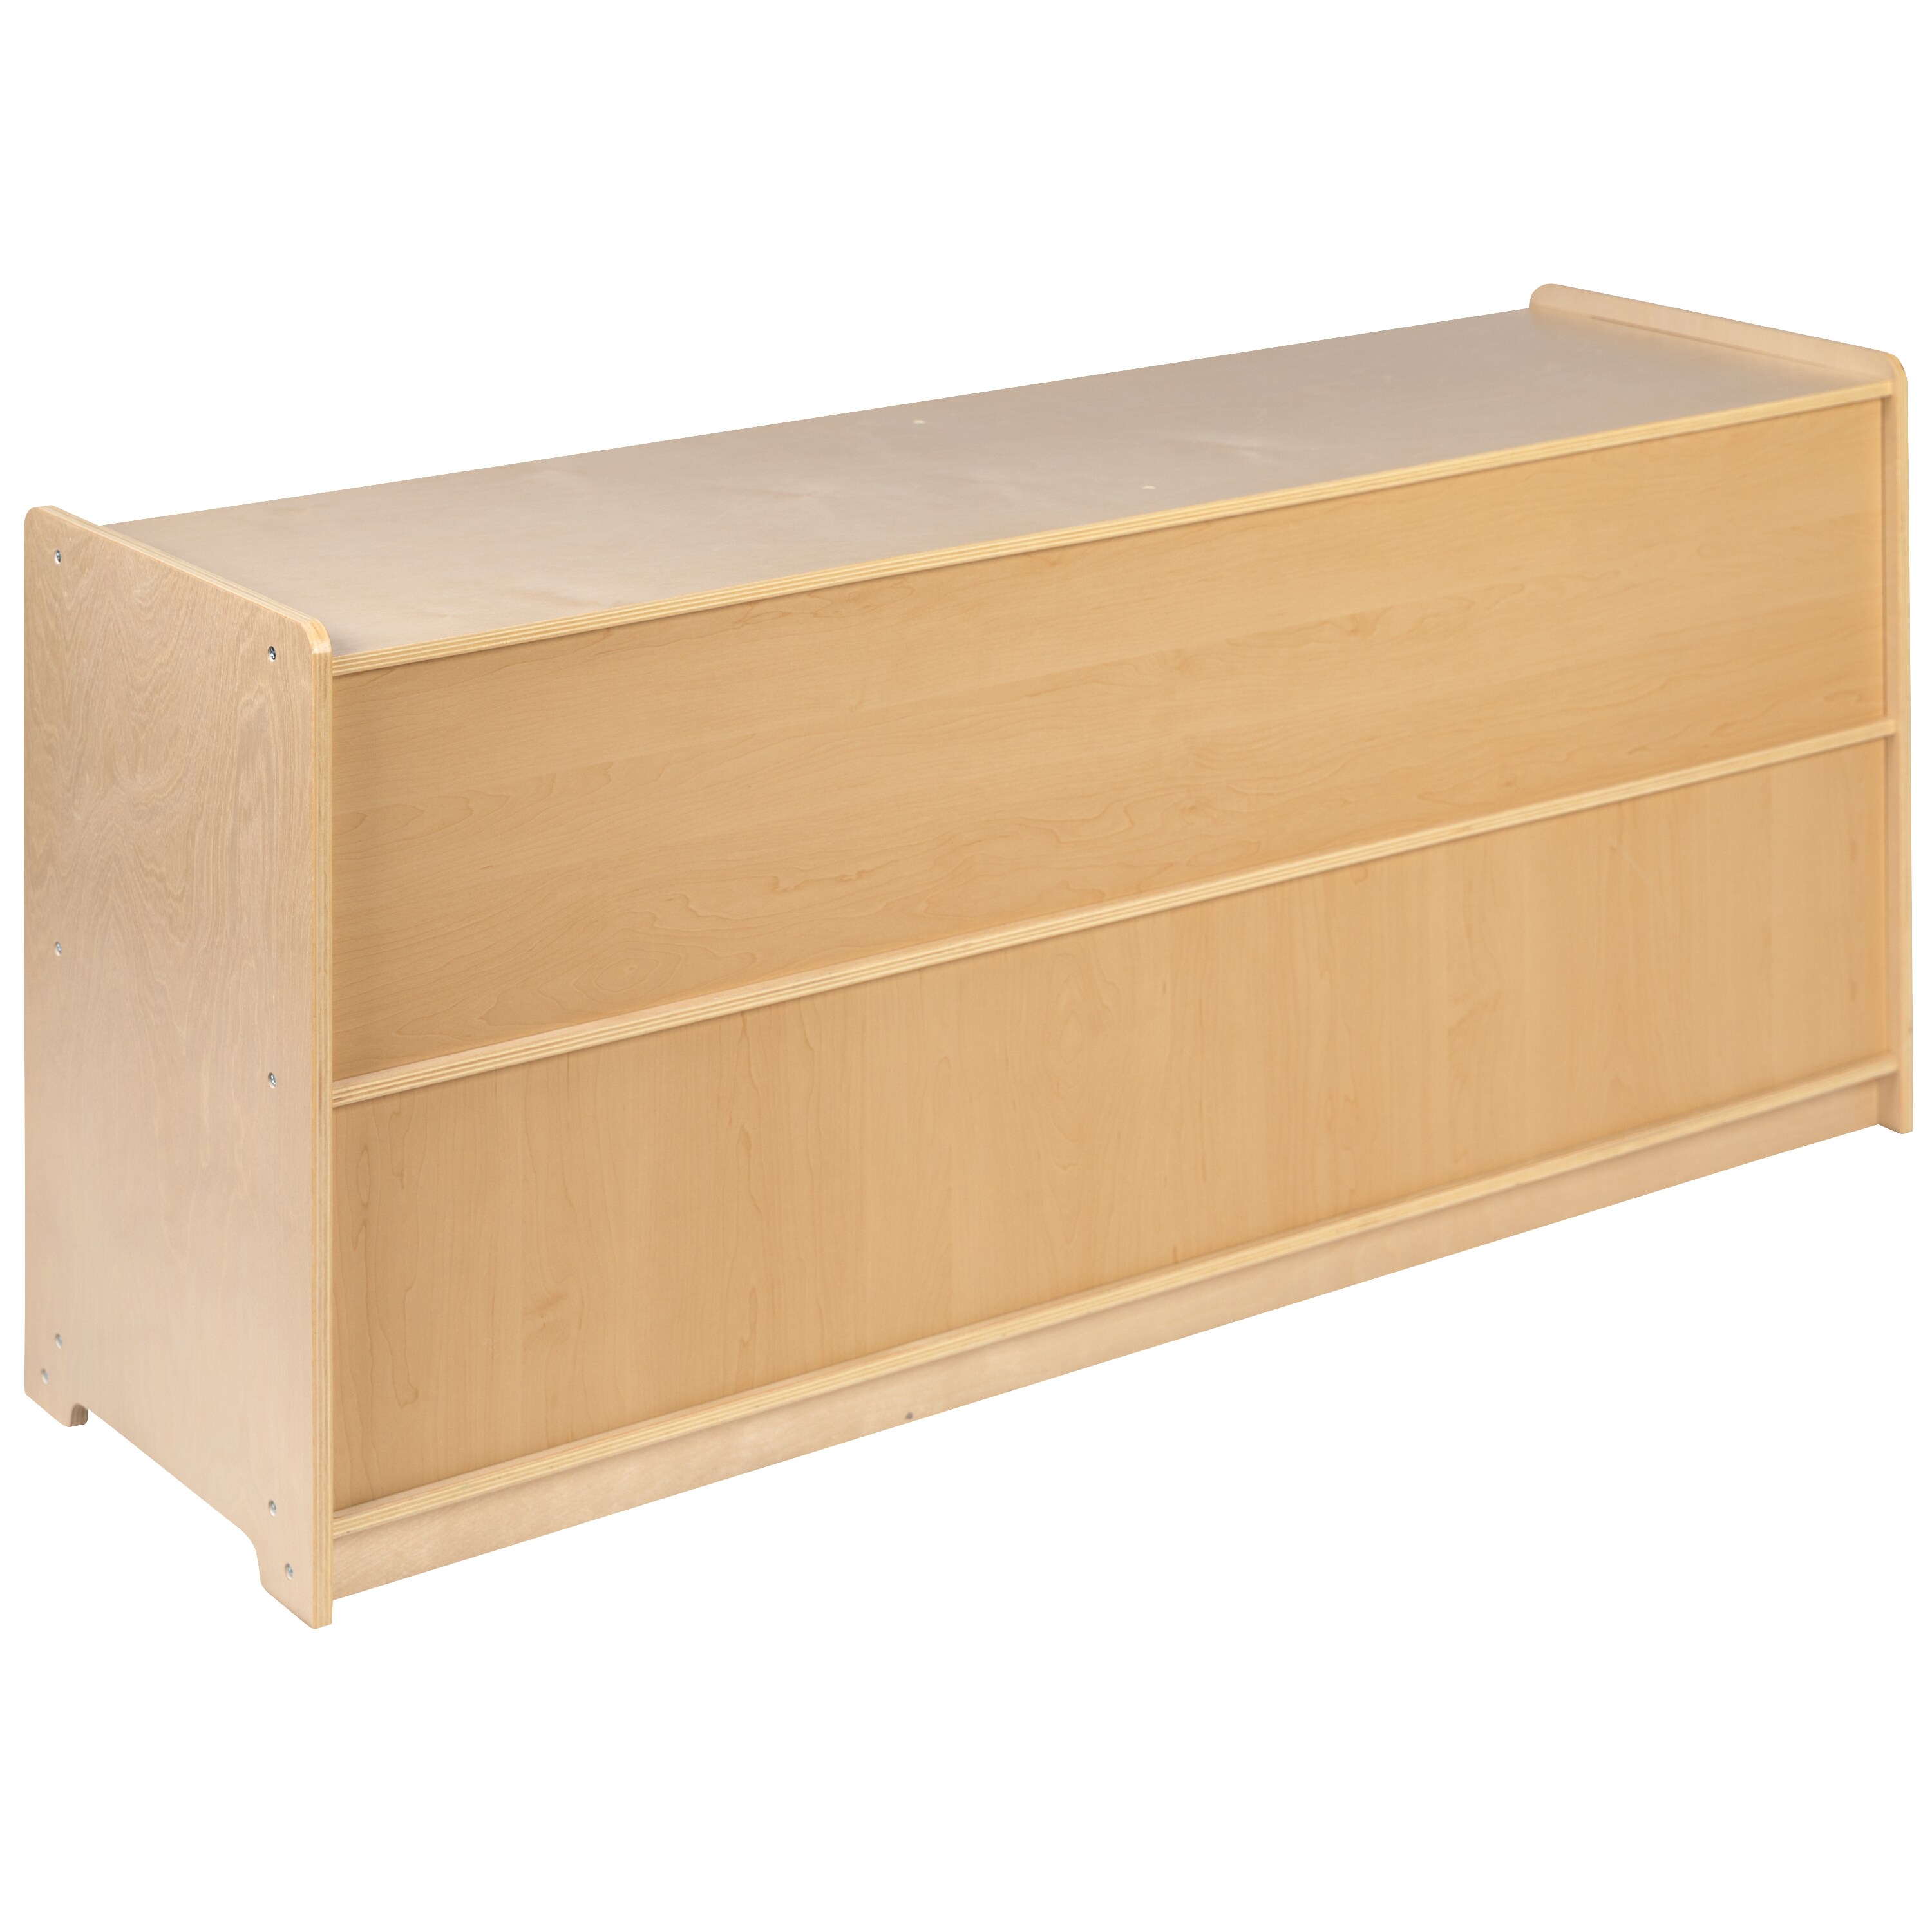 Flash Furniture 4 Shelf Wooden Book Magazine Display Stand 39 716 H x 31 12  W x 11 34 D Natural - Office Depot